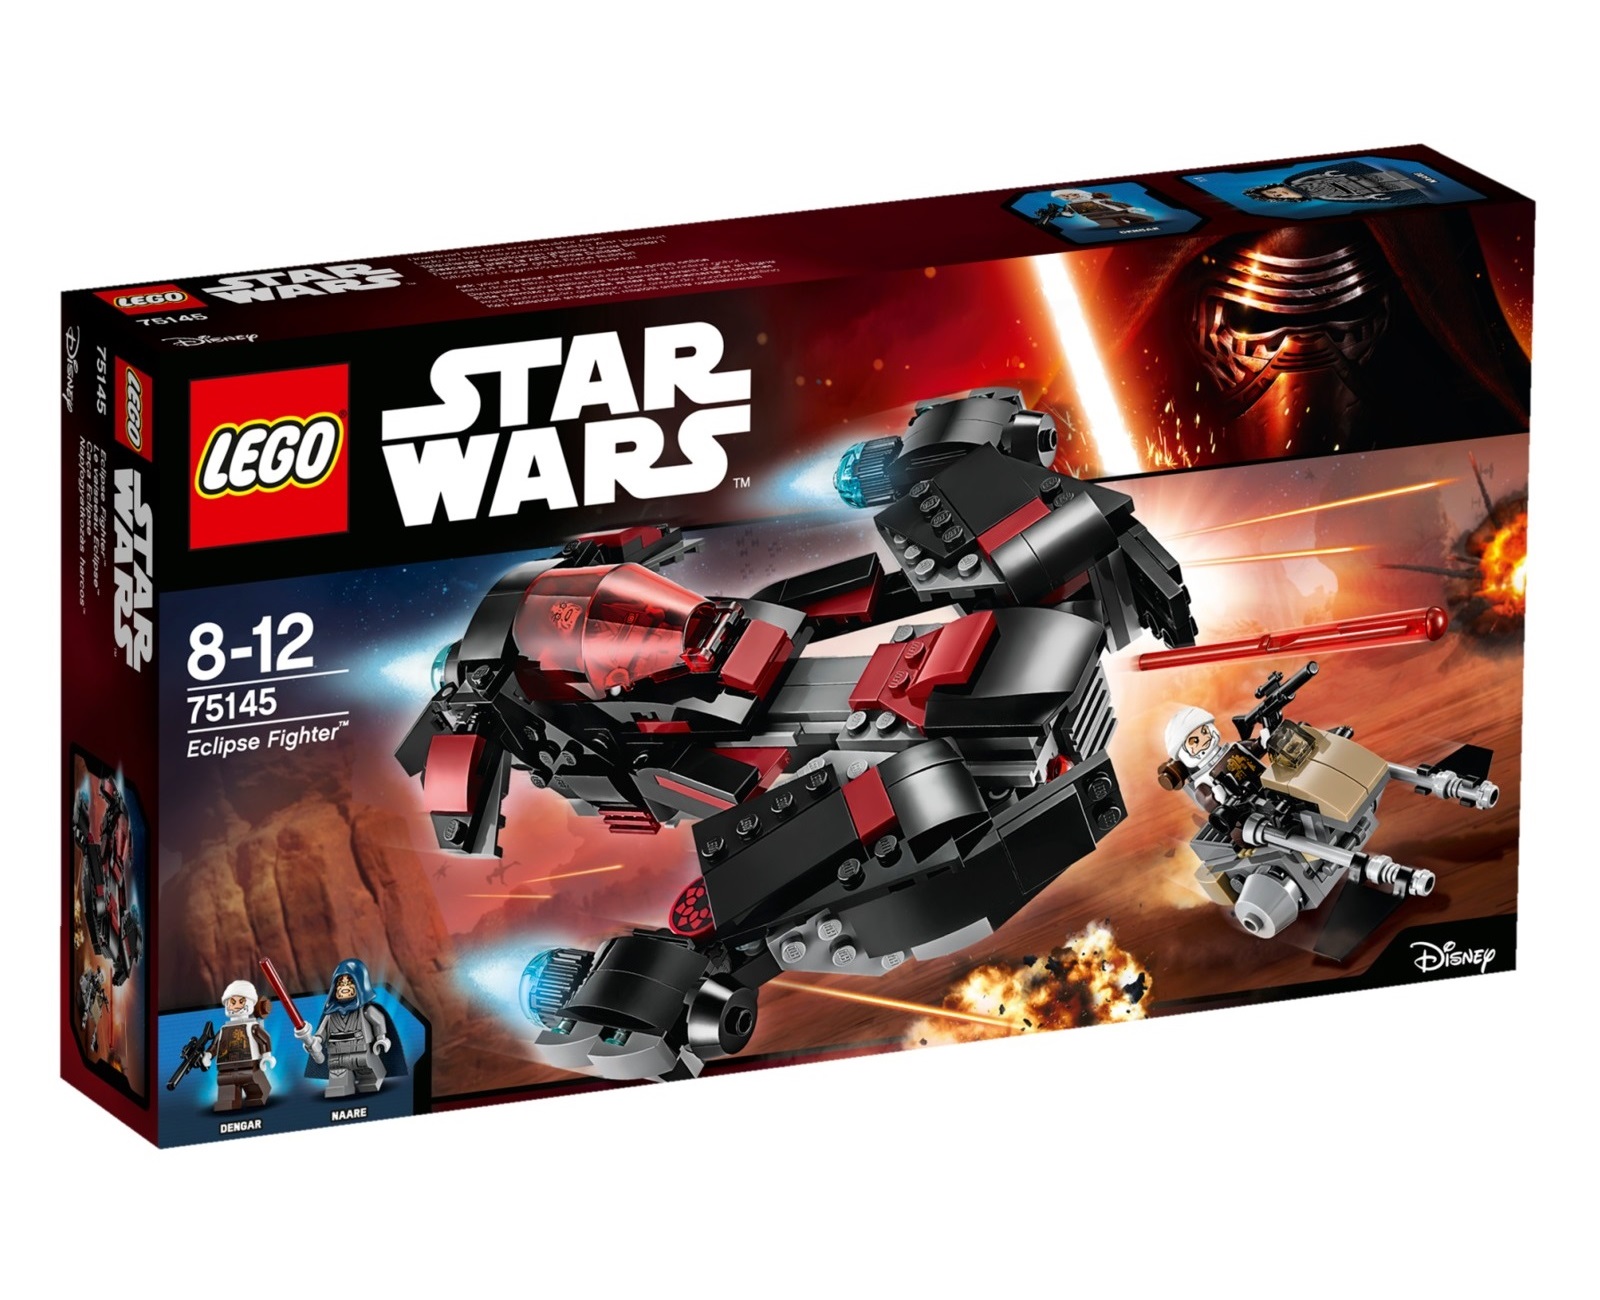 New Lego Star Wars sets coming soon SWNZ, Star Wars New Zealand